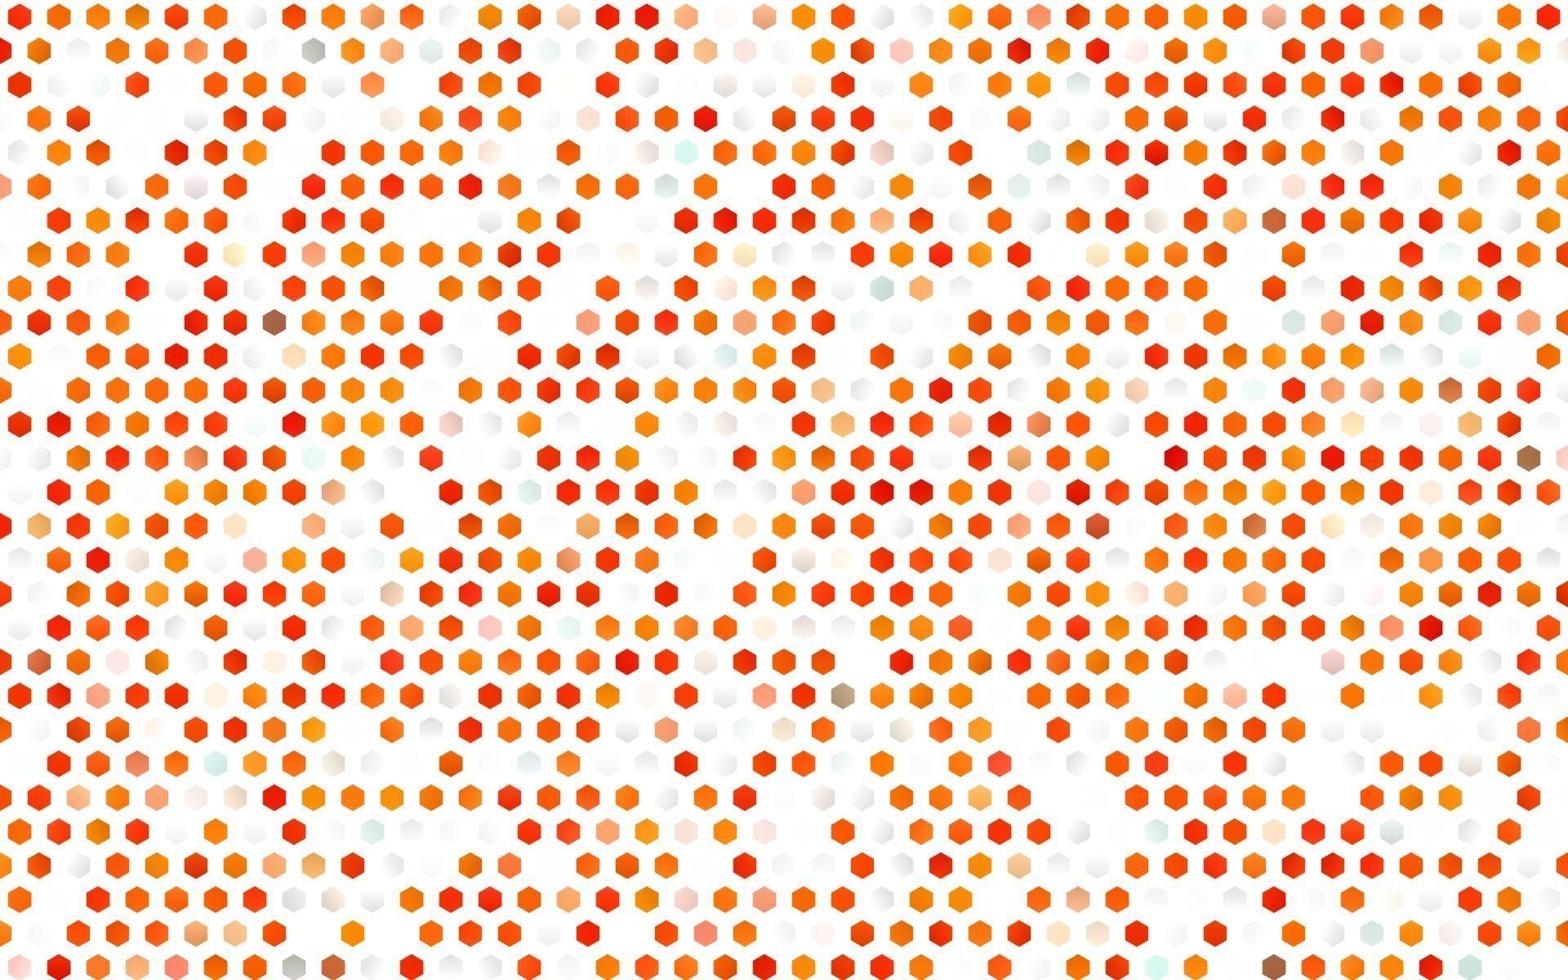 textura vector laranja claro com hexágonos coloridos.